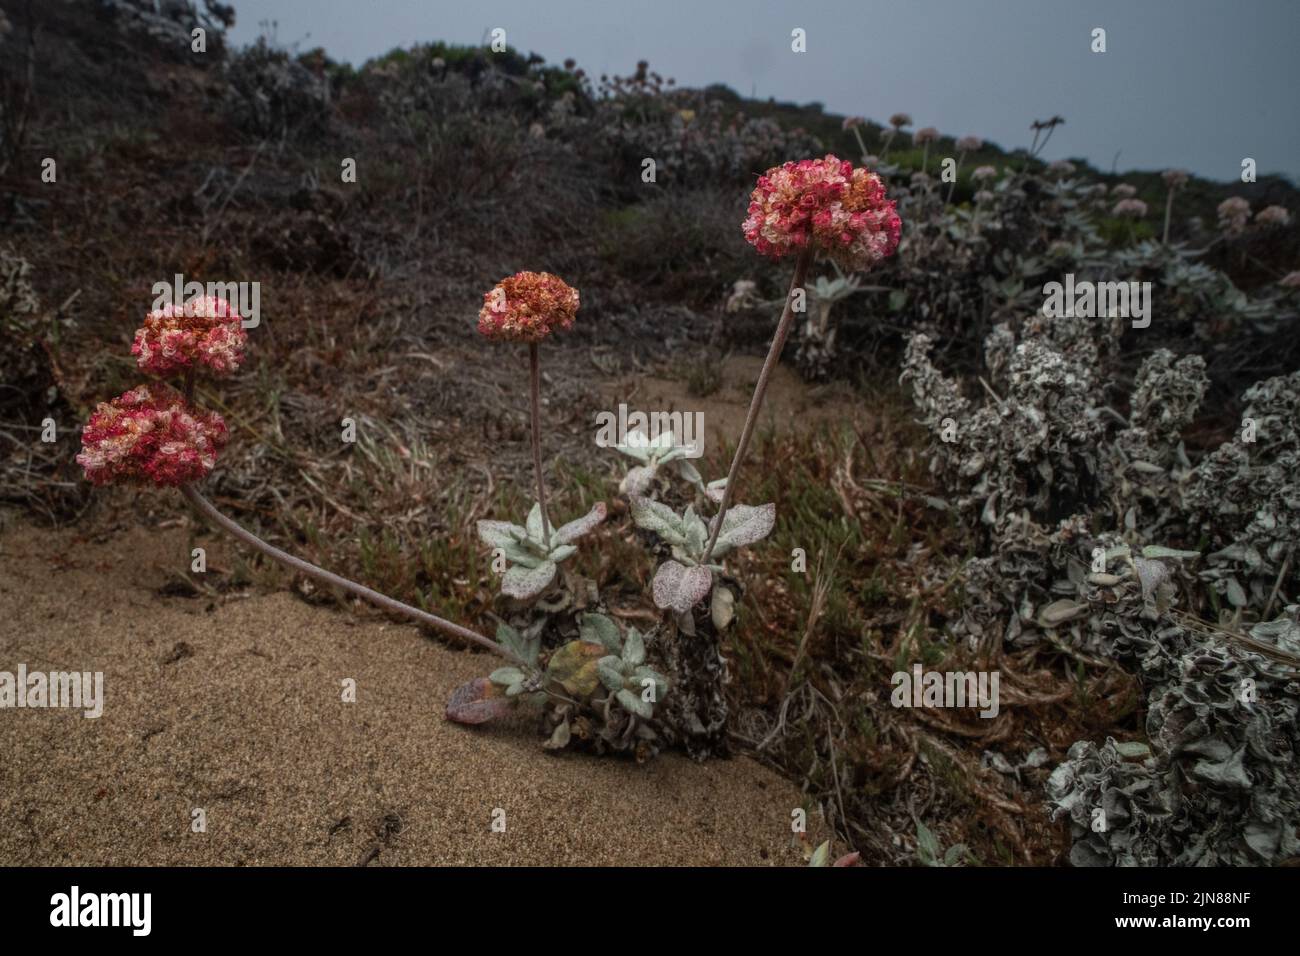 Coast or seaside Buckwheat (Eriogonum latifolium) growing on sand dune habitat in coastal California in Point Reyes National seashore. Stock Photo